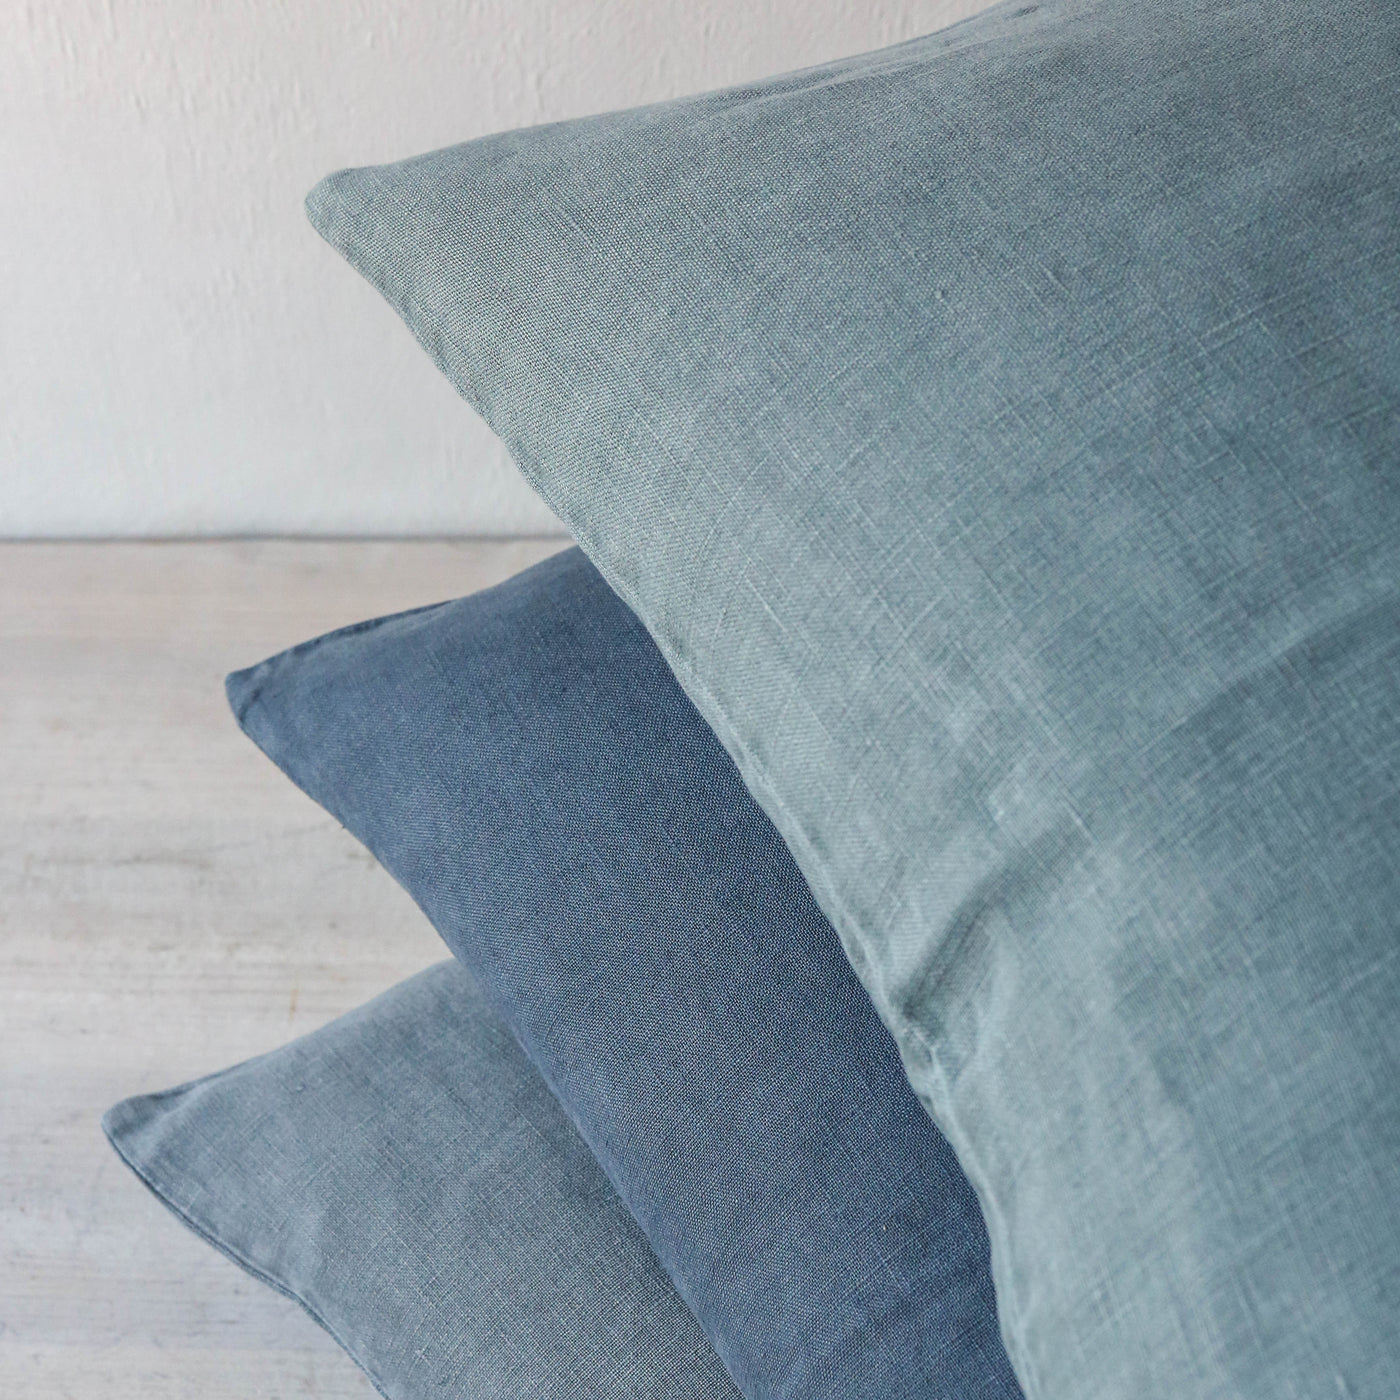 Linen Cushion Cover - Dusty Blue